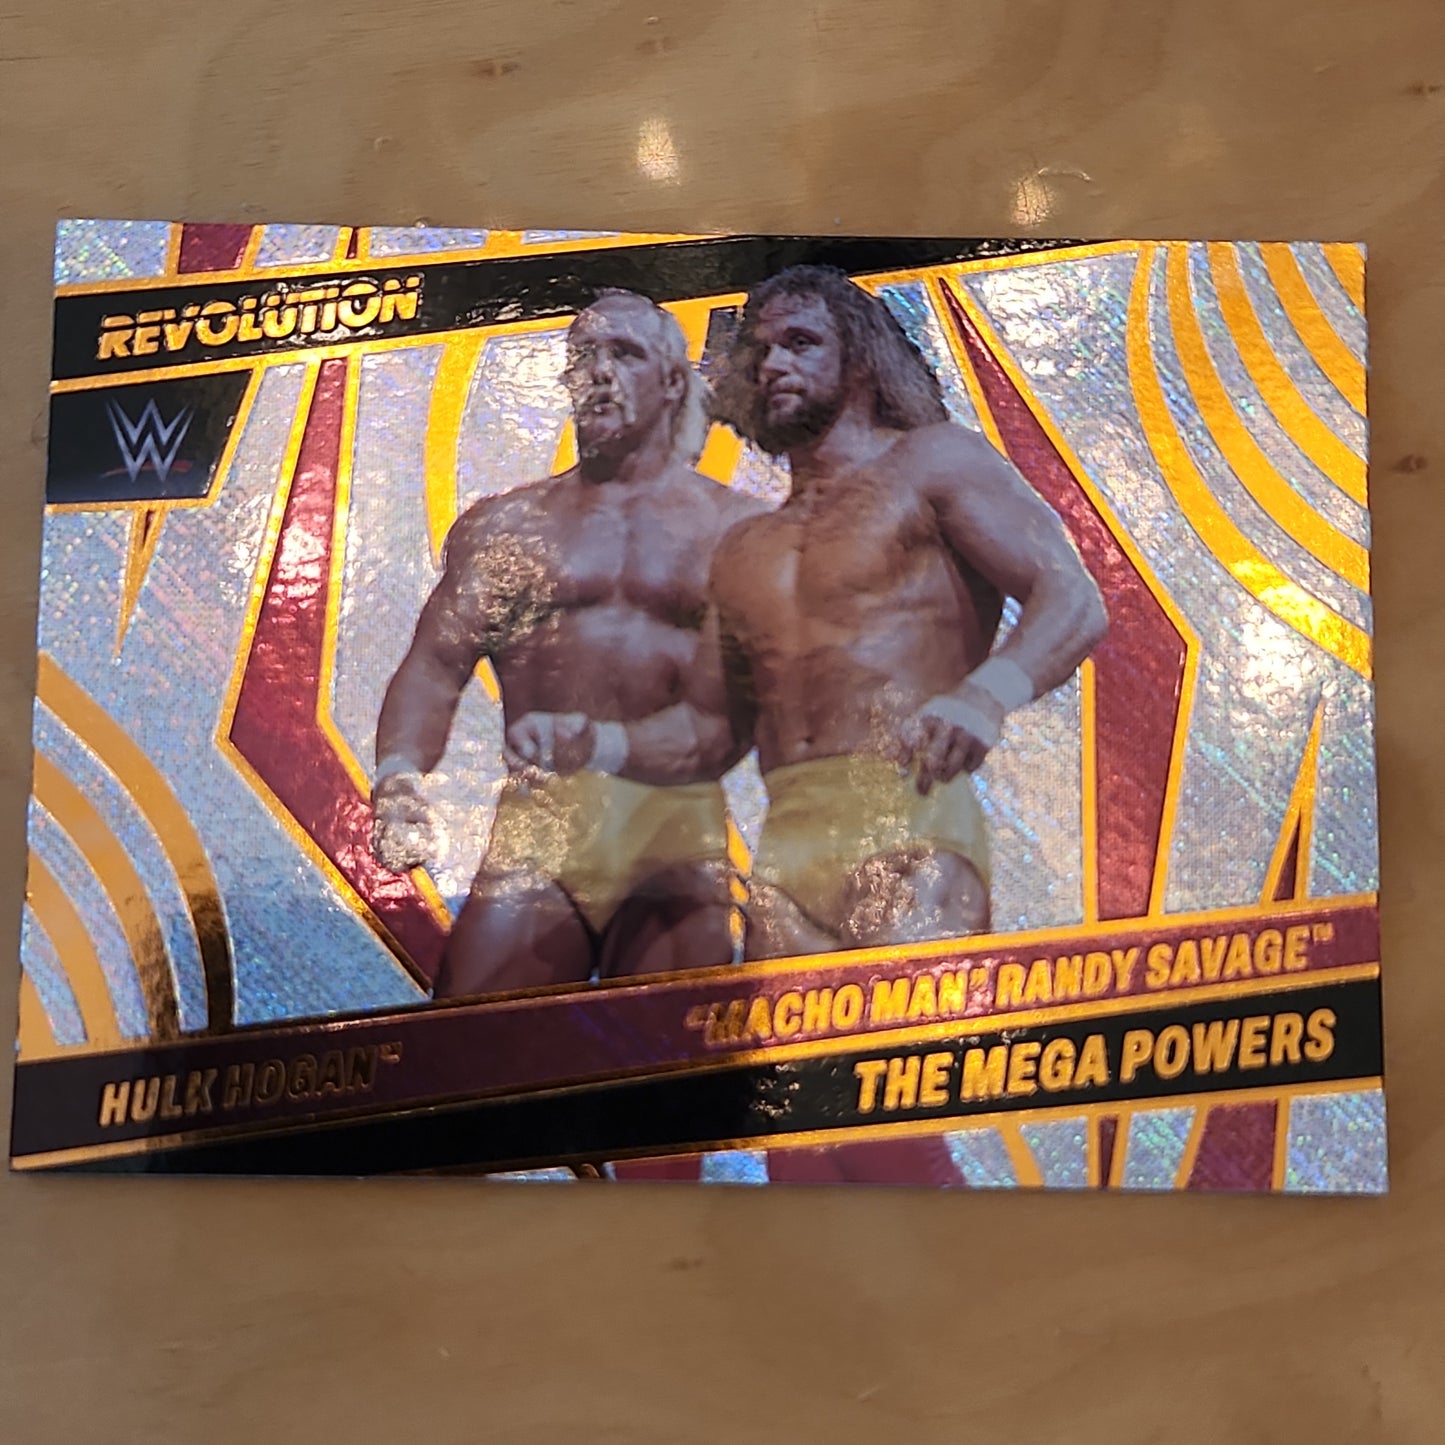 Panini Revolution THE MEGA POWERS Hulk Hogan and "Macho Man" Randy Savage #131